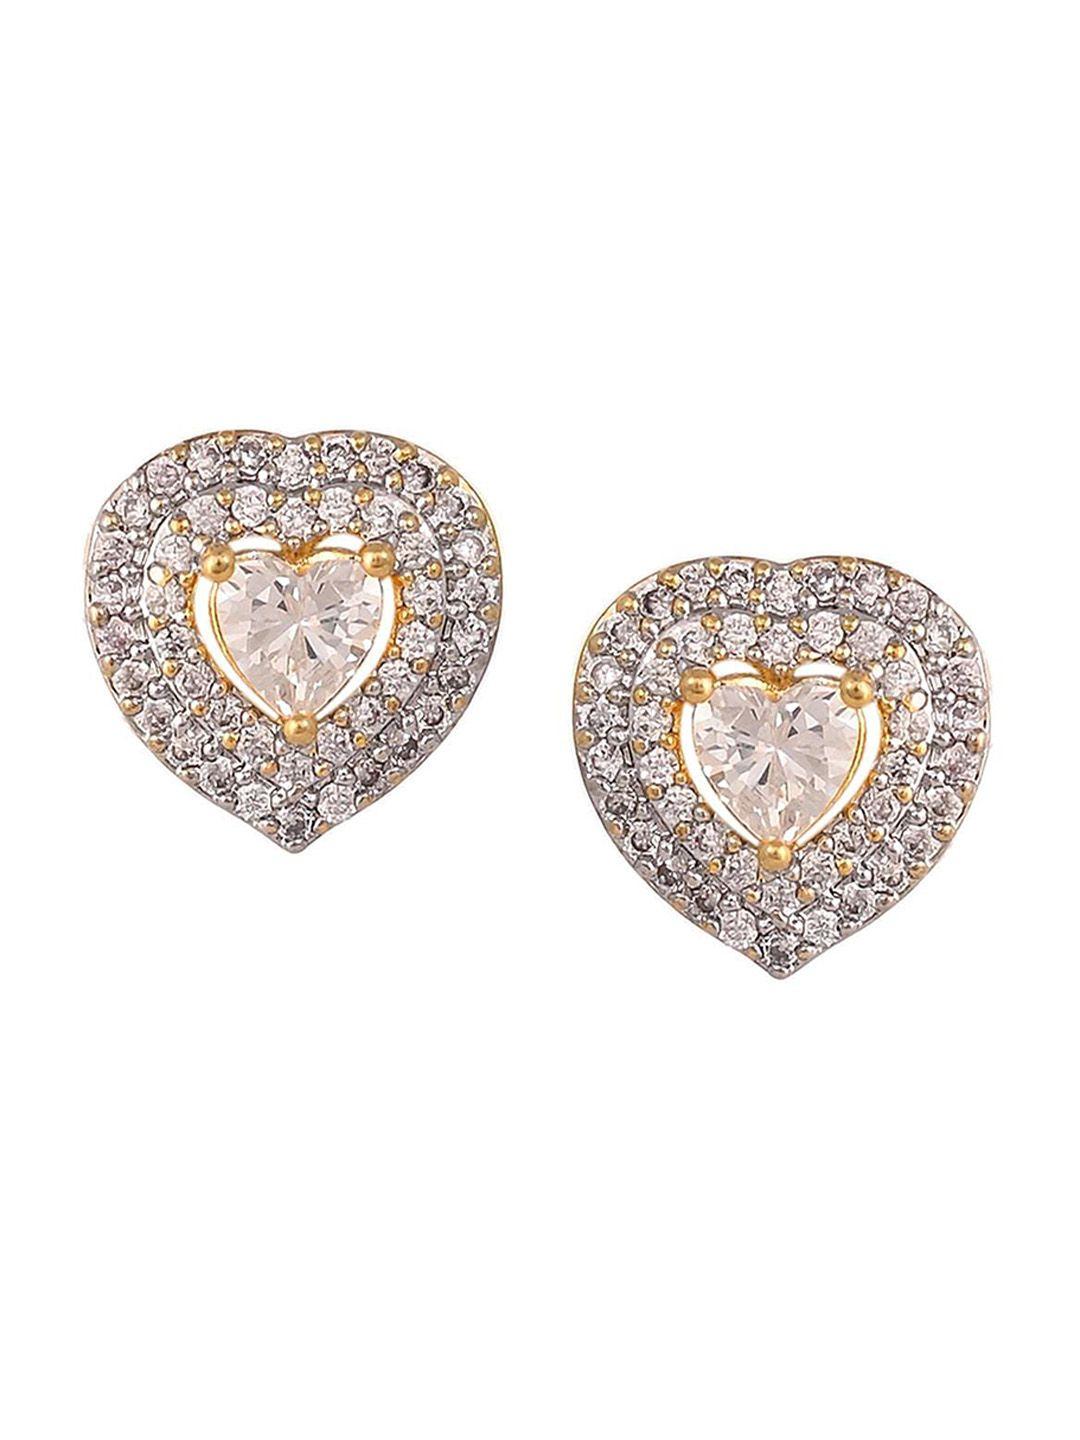 ratnavali jewels gold-plated american diamond studded heart shaped studs earrings